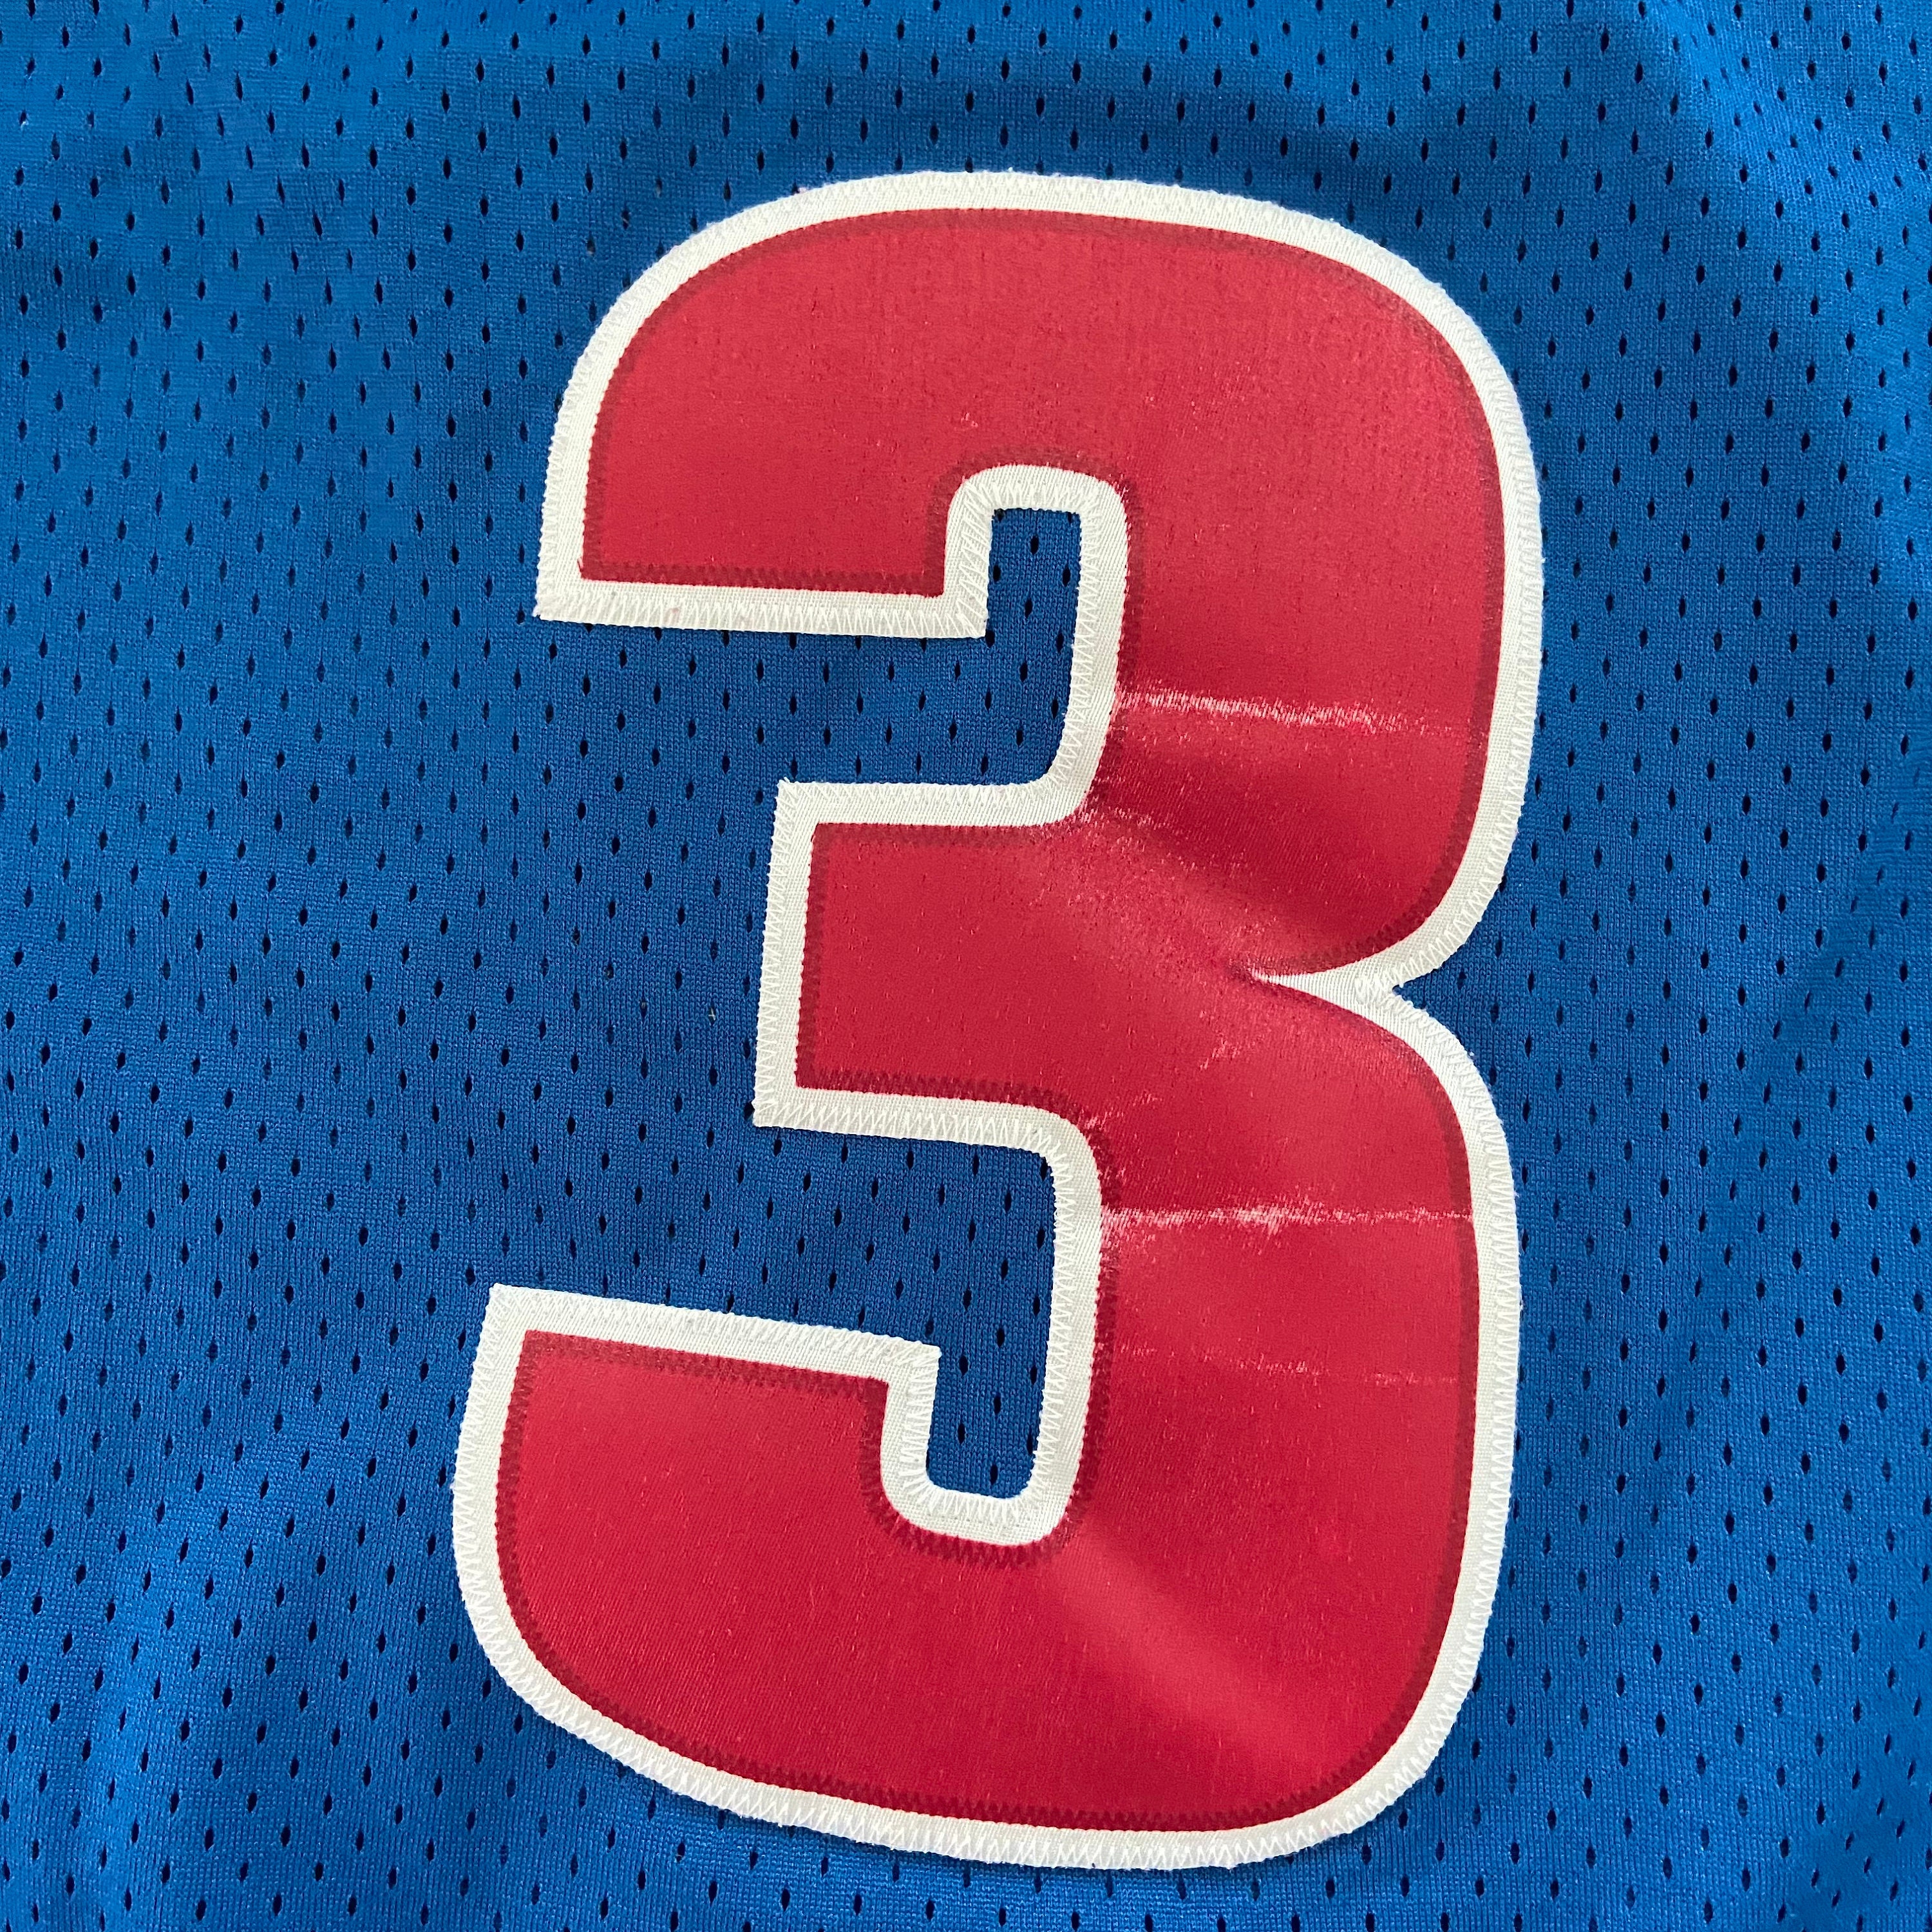 Mens Red M Medium Big Ben Wallace # 3 Detroit Pistons Stitched Sewn NBA  Jersey